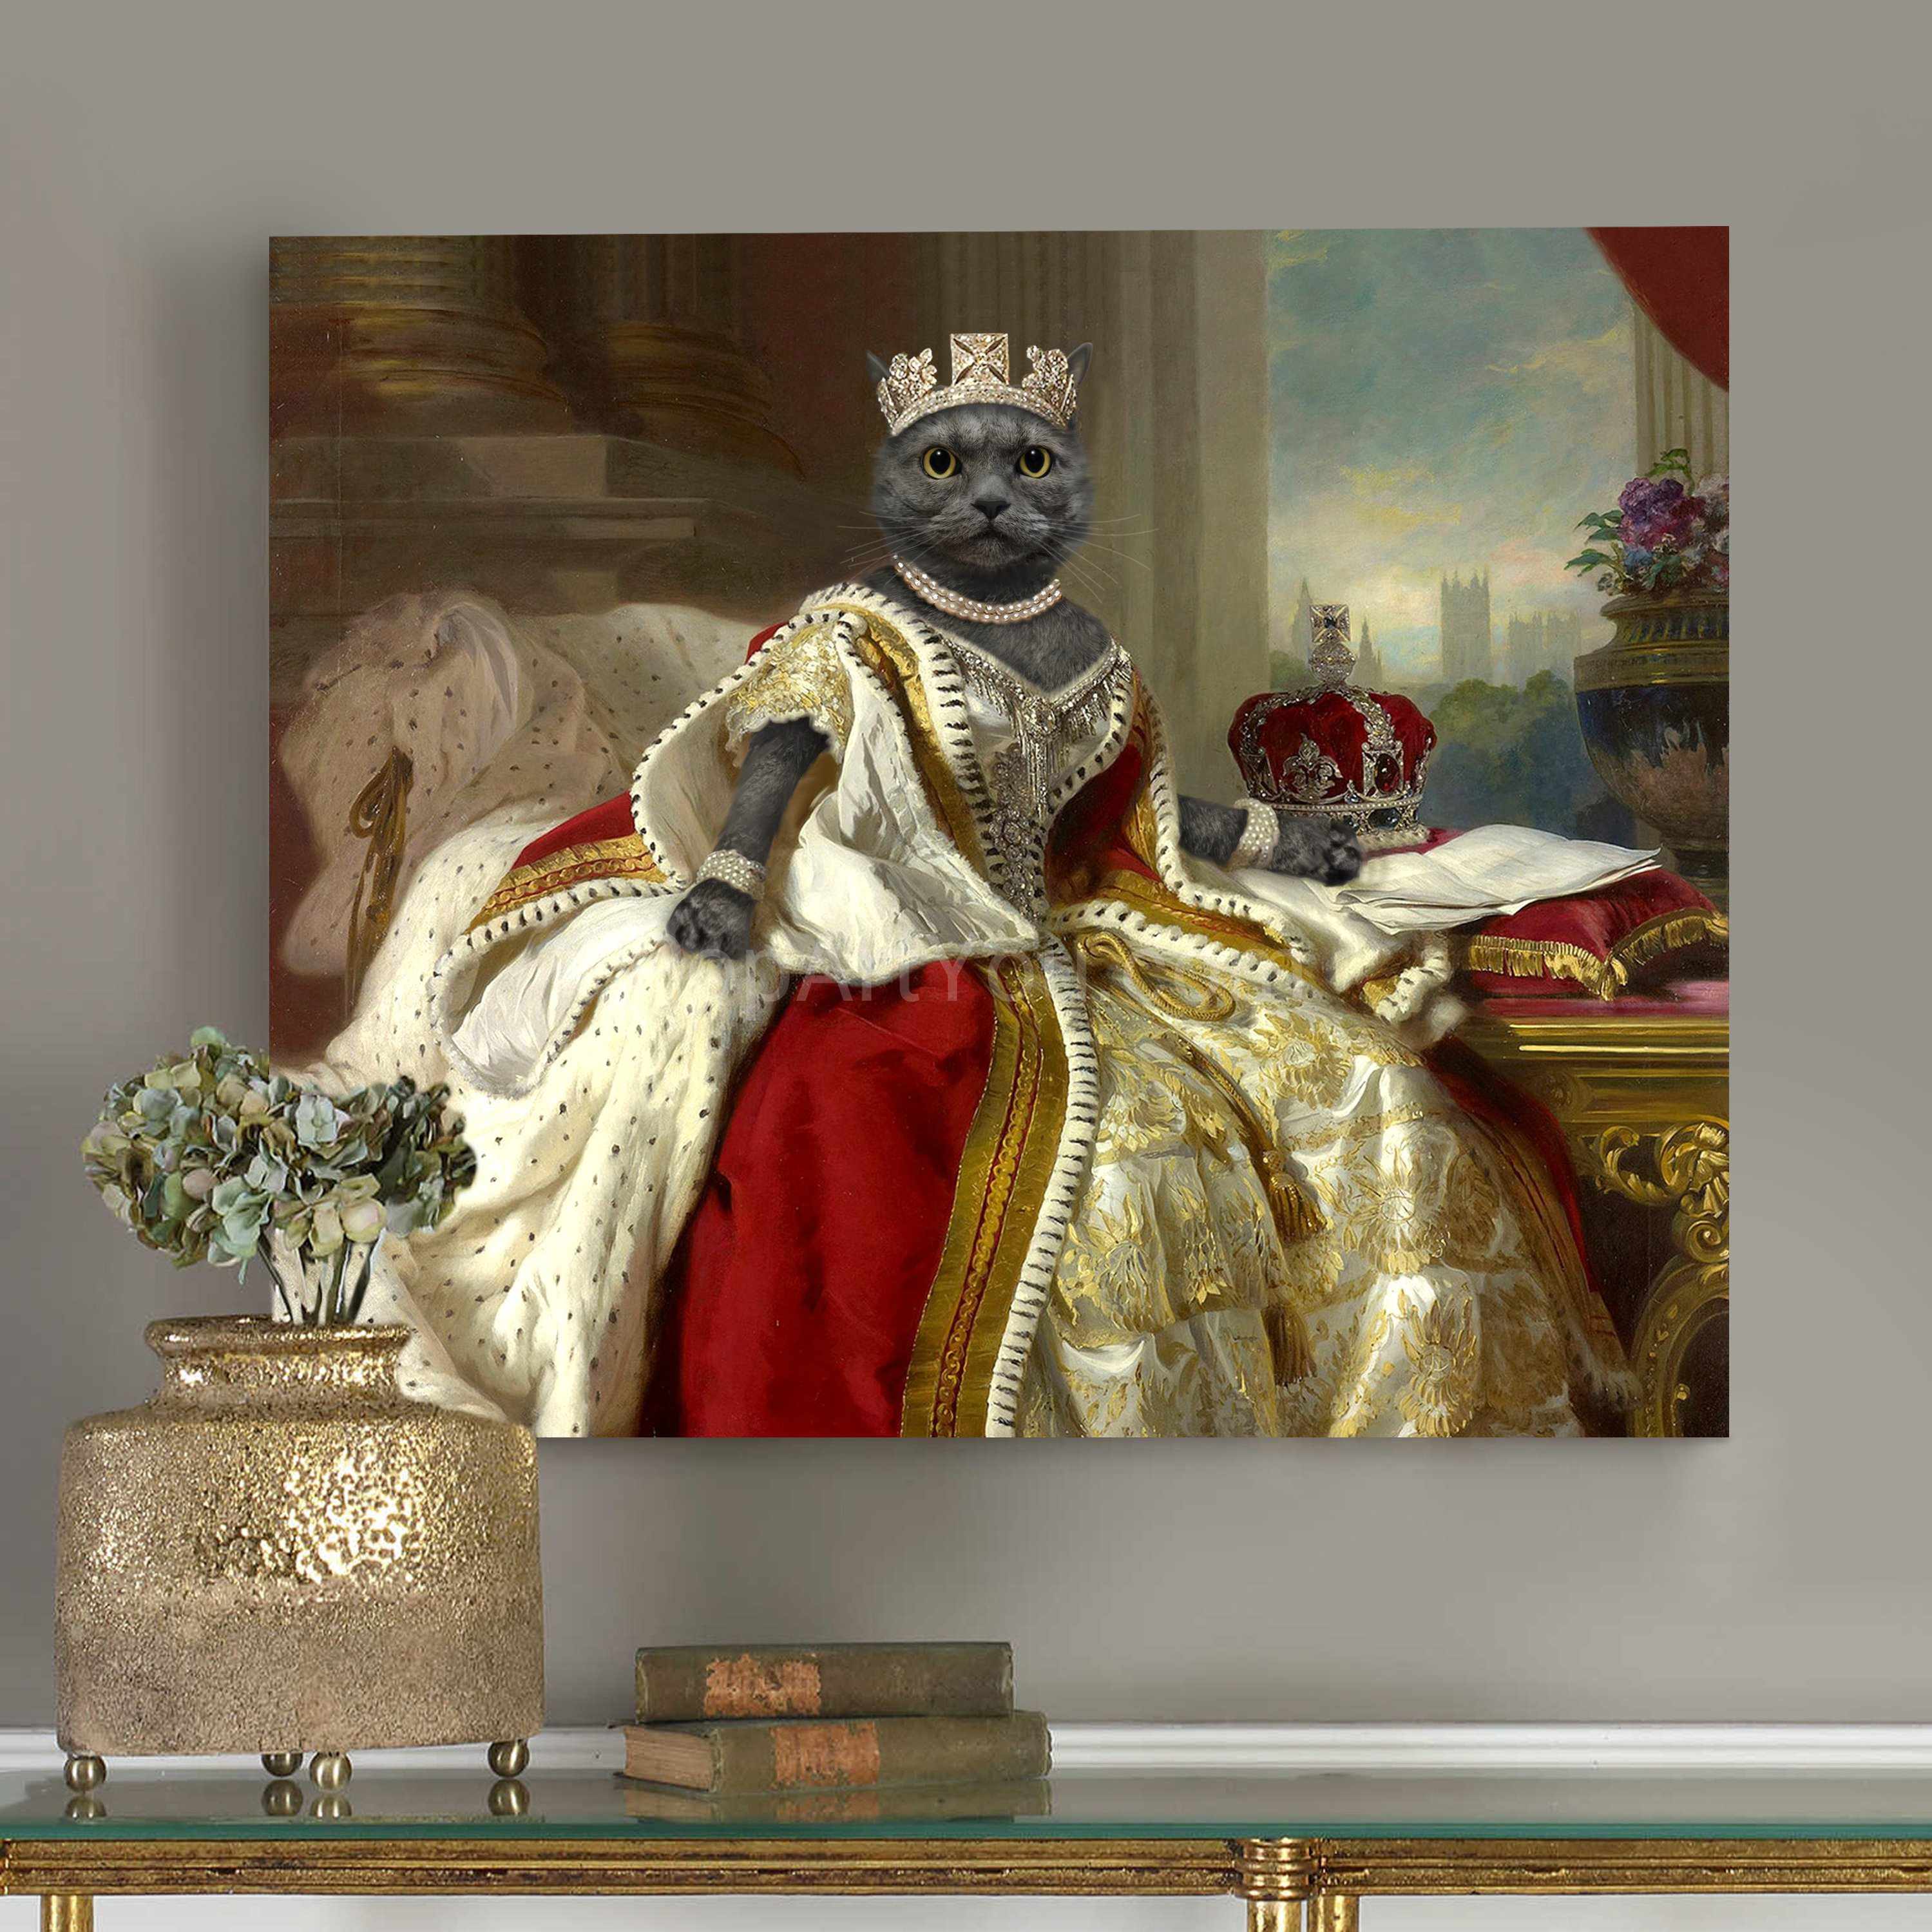 Queen Victoria - custom cat portrait